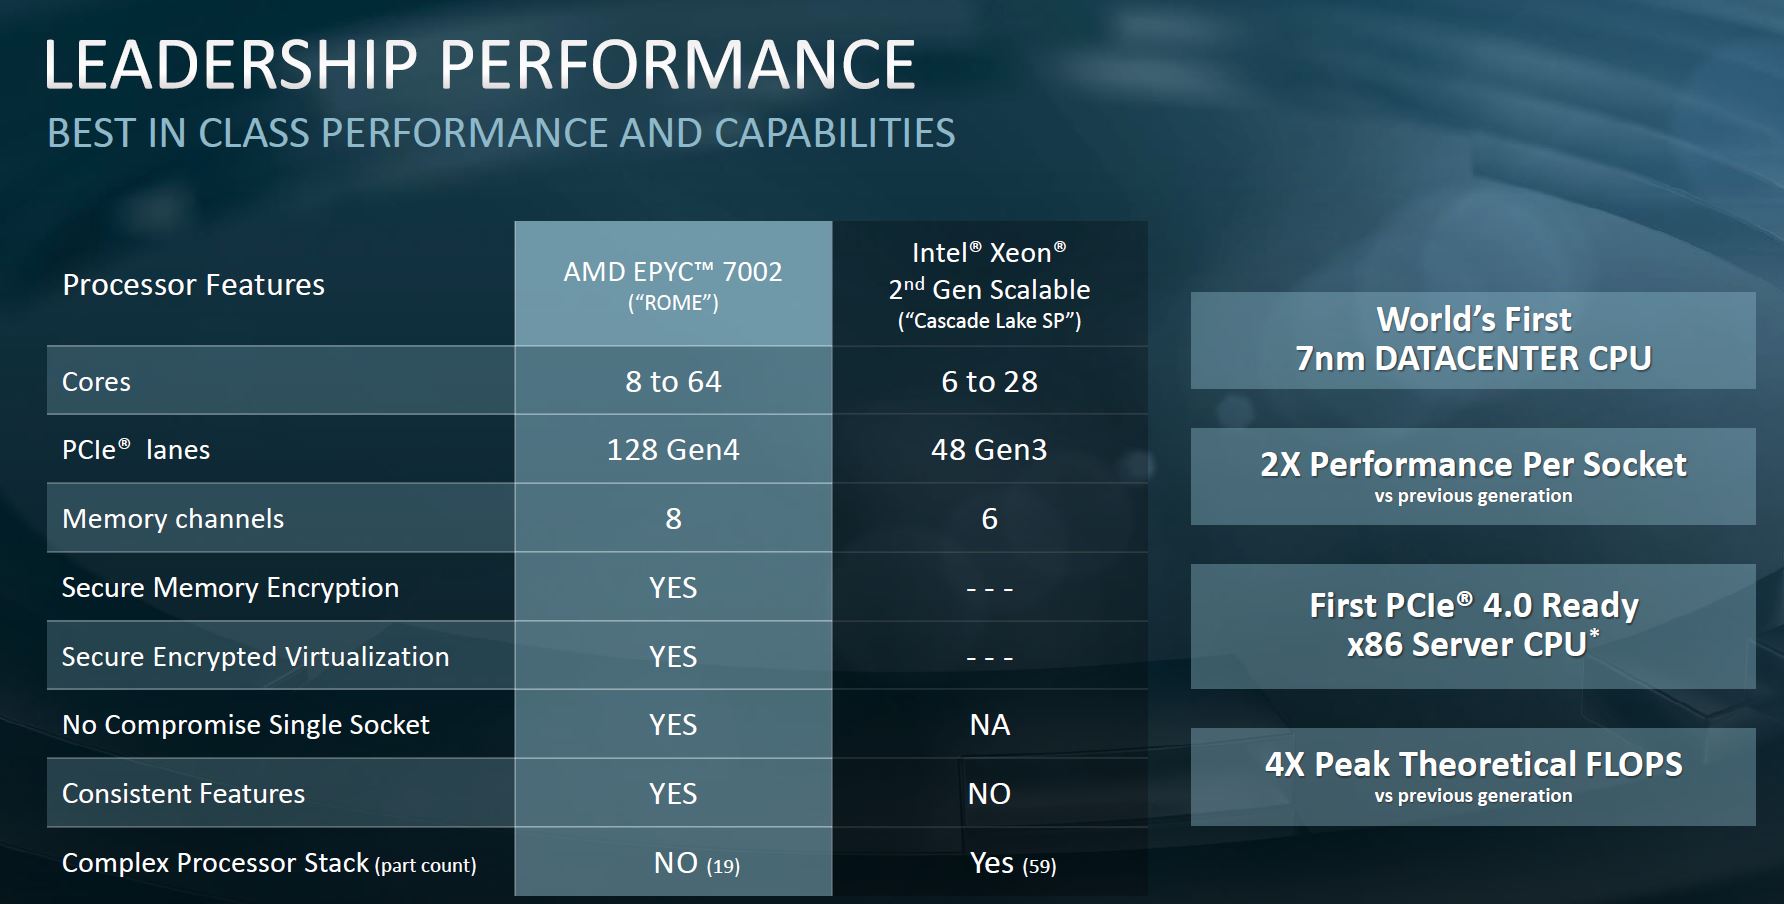 AMD-EPYC-7002-v-2nd-Generation-Intel-Xeon-Scalable-Comparison.jpg